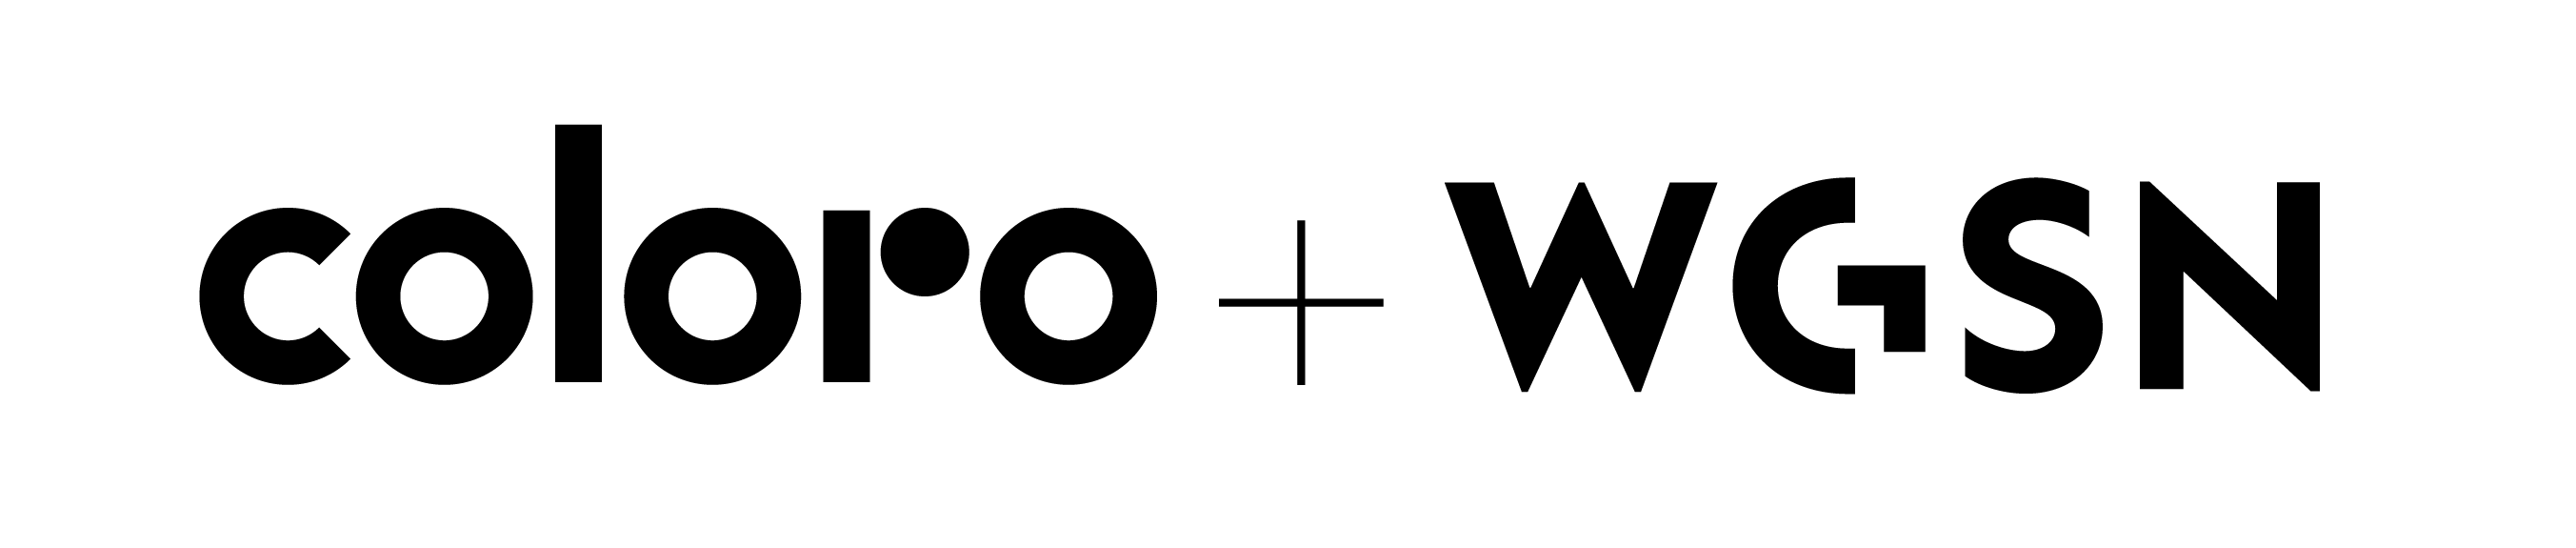 coloro-wgsn-logo-2021-blk-1